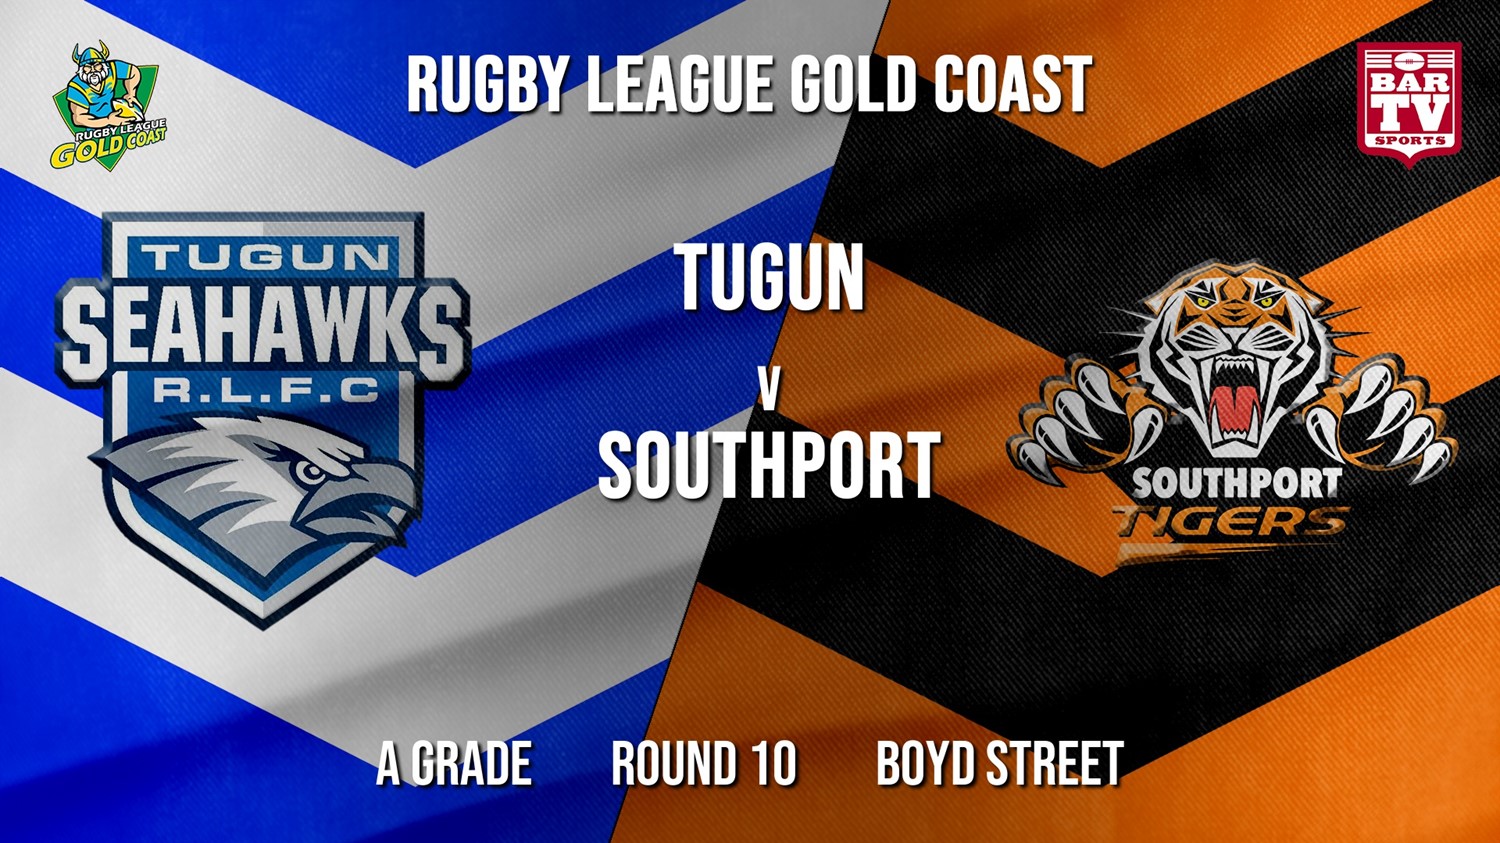 RLGC Round 10 - A Grade - Tugun Seahawks v Southport Tigers Minigame Slate Image